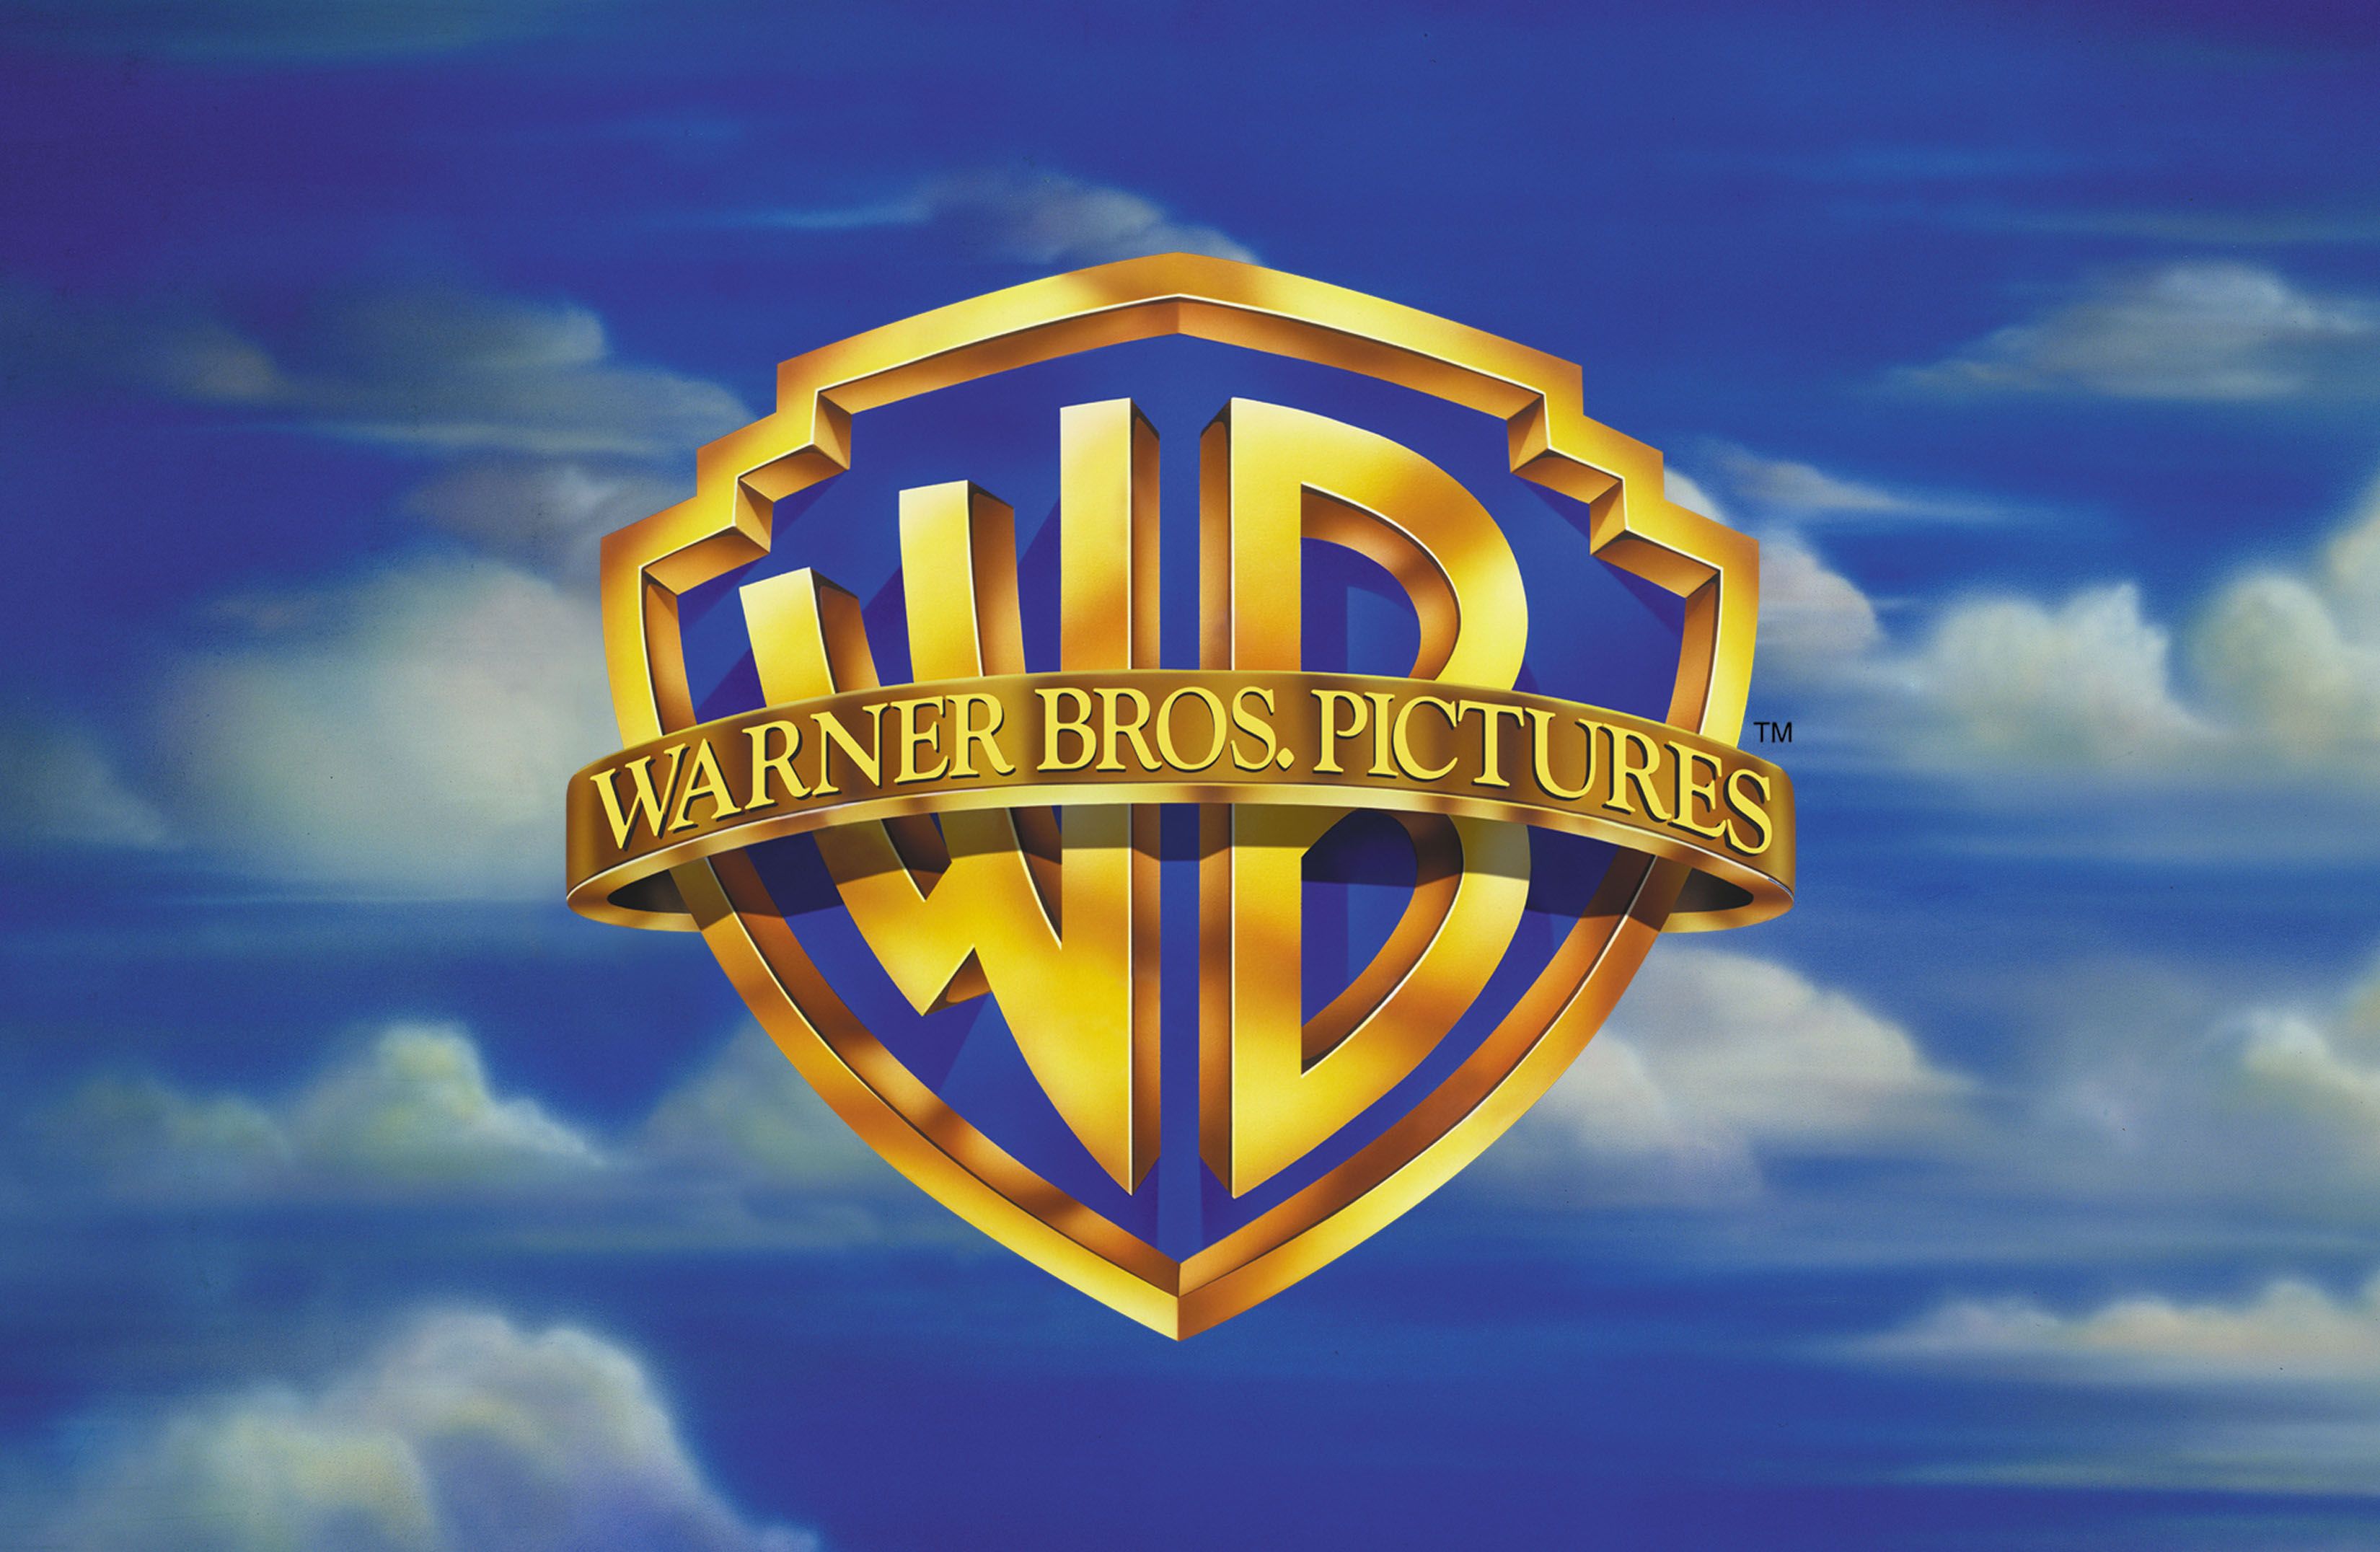 Warner Bros Wallpaper. Warner Bros Wallpaper, Jocelyn Warner Wisteria Wallpaper and Warner Bros DC Movies Wallpaper